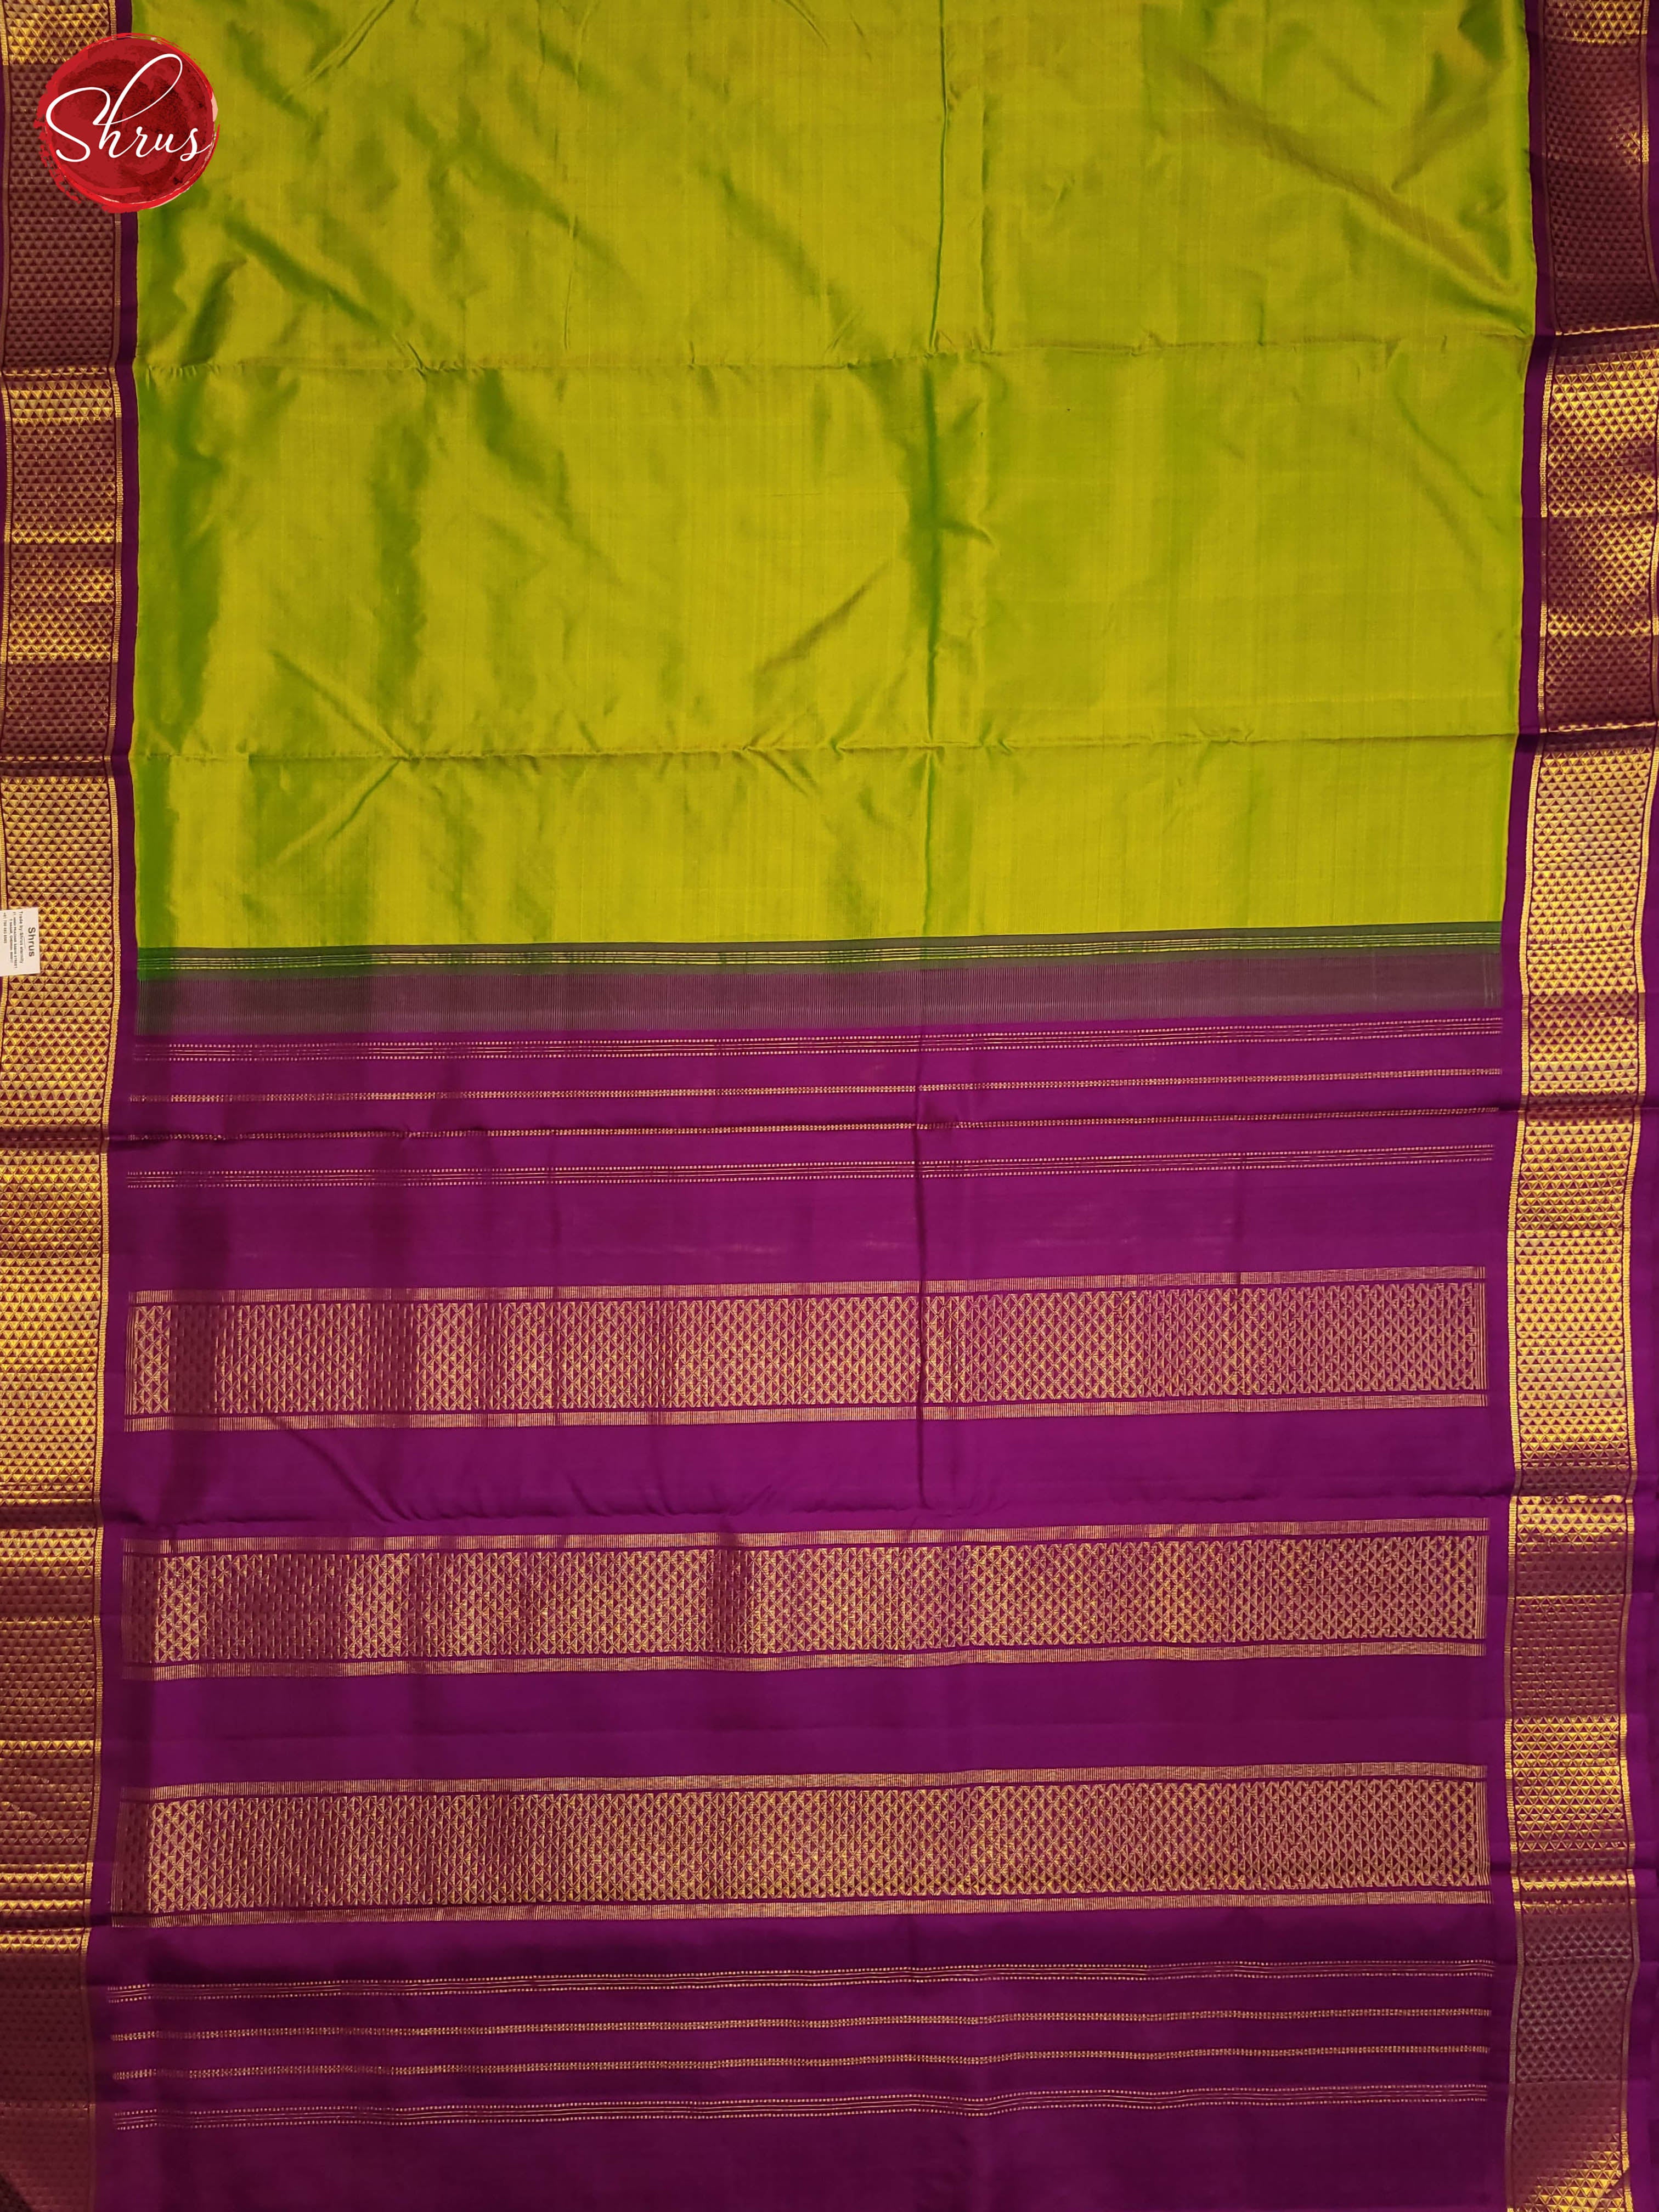 Green and violet - Shop on ShrusEternity.com